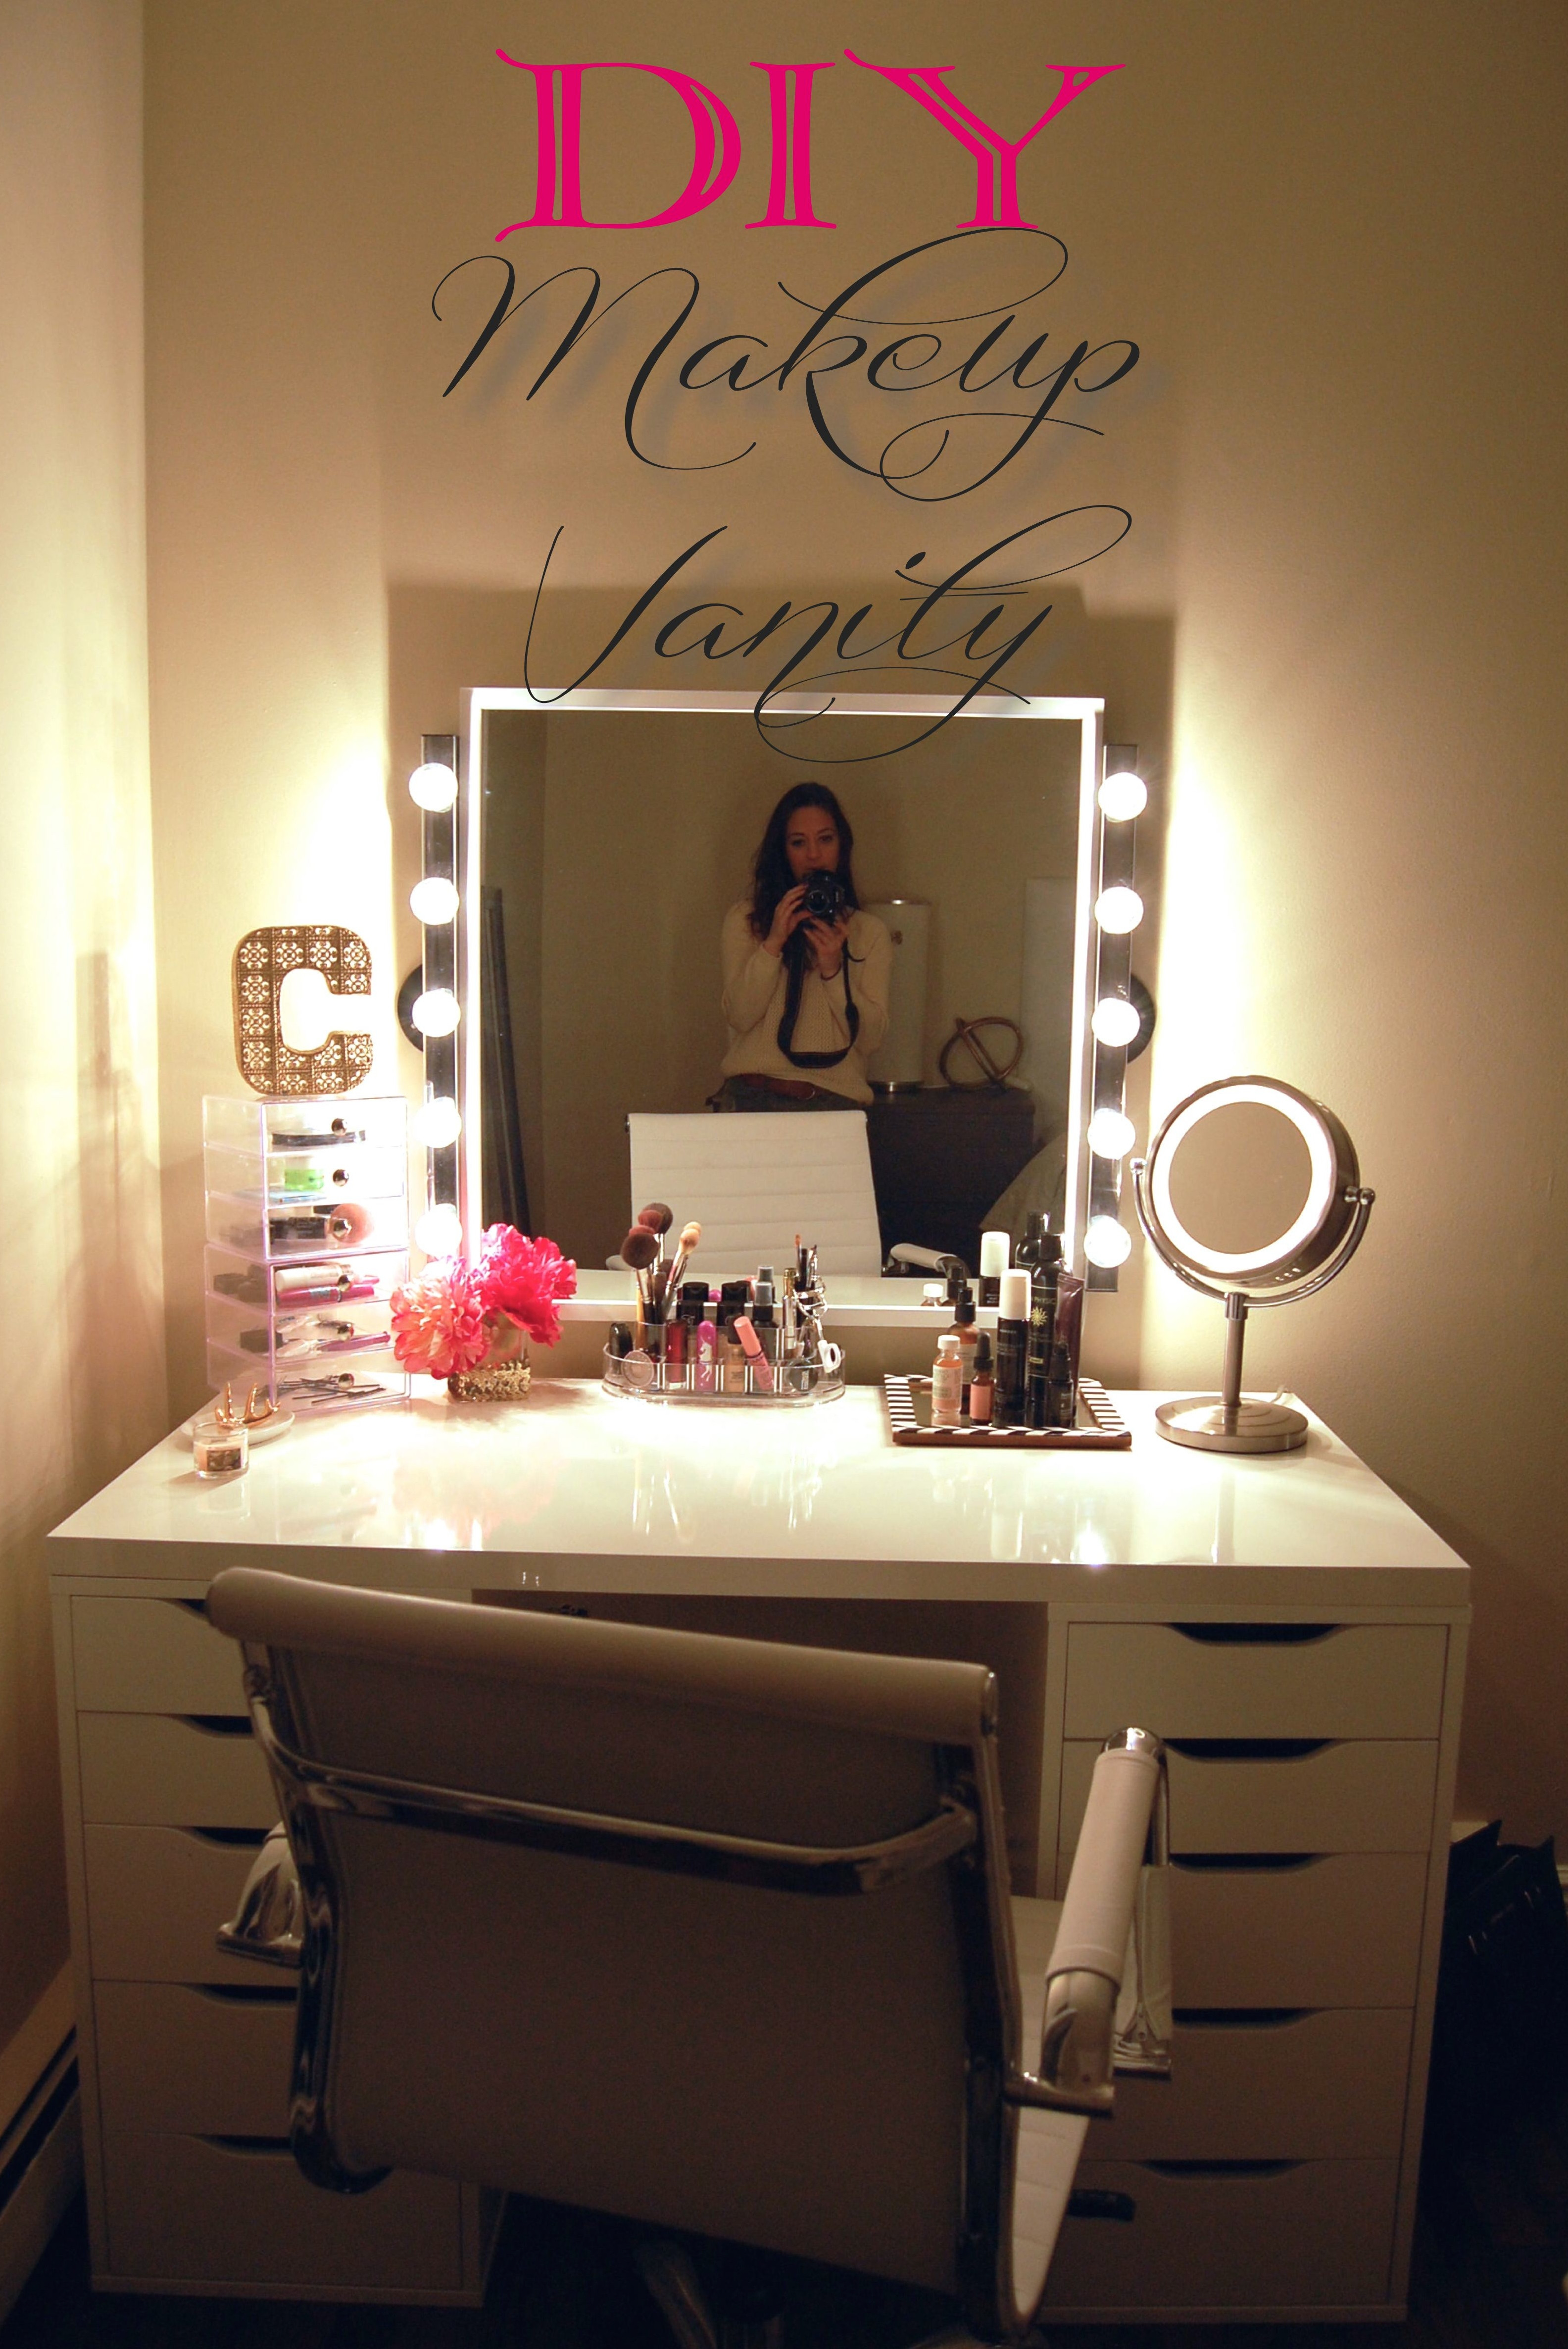 Best ideas about DIY Bedroom Vanity
. Save or Pin DIY Makeup Vanity – Made2Style Now.